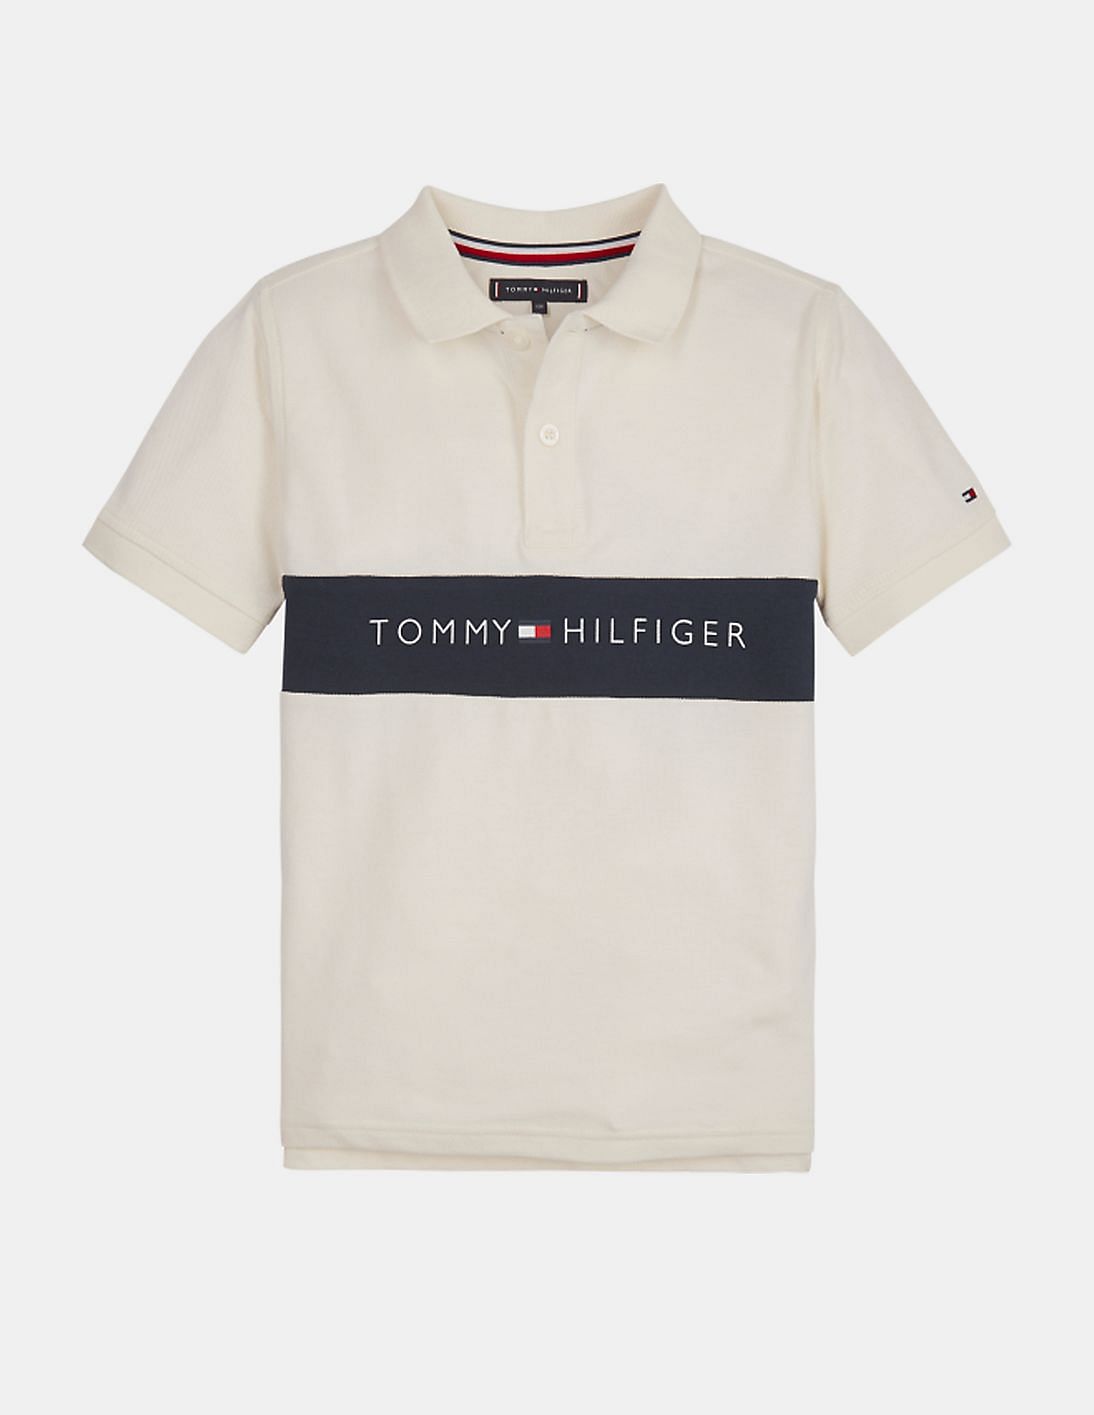 Buy Tommy Hilfiger Kids Boys White Short Sleeve Printed Polo Shirt ...